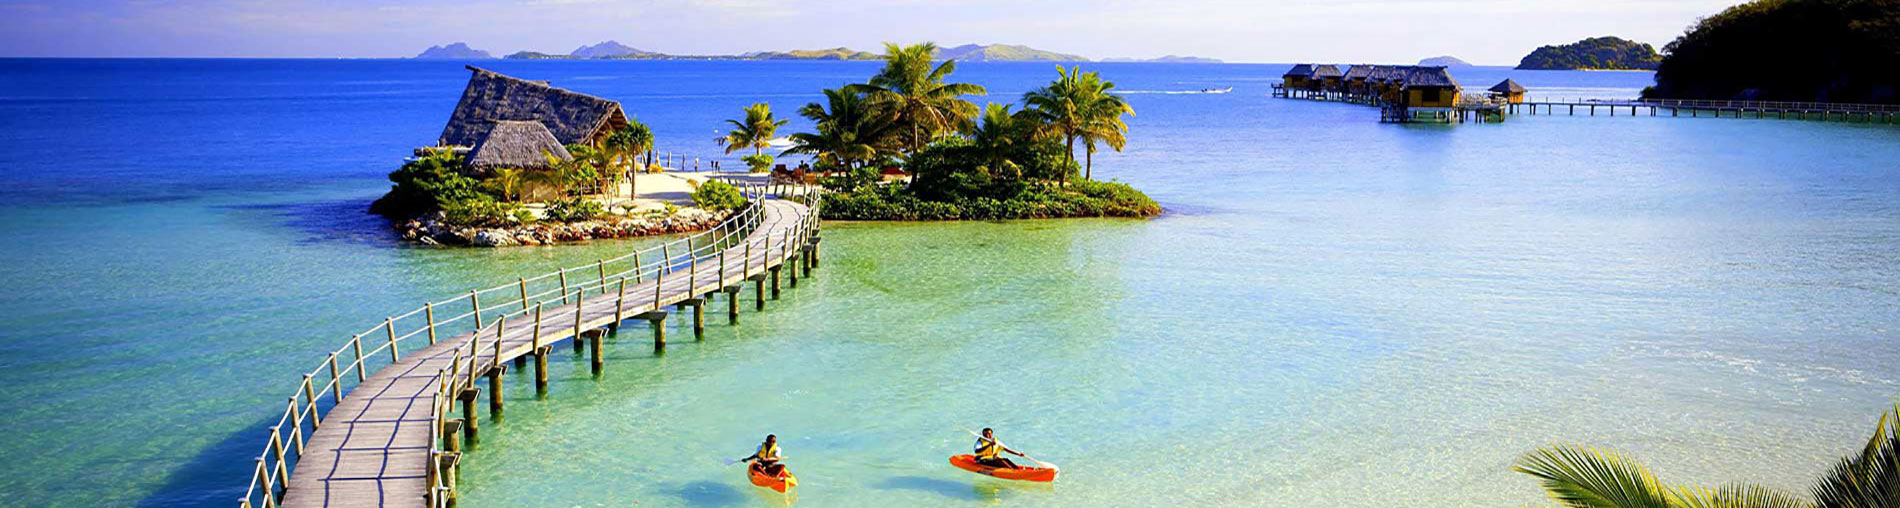 Fiji Island Holiday Package - 4 Nights